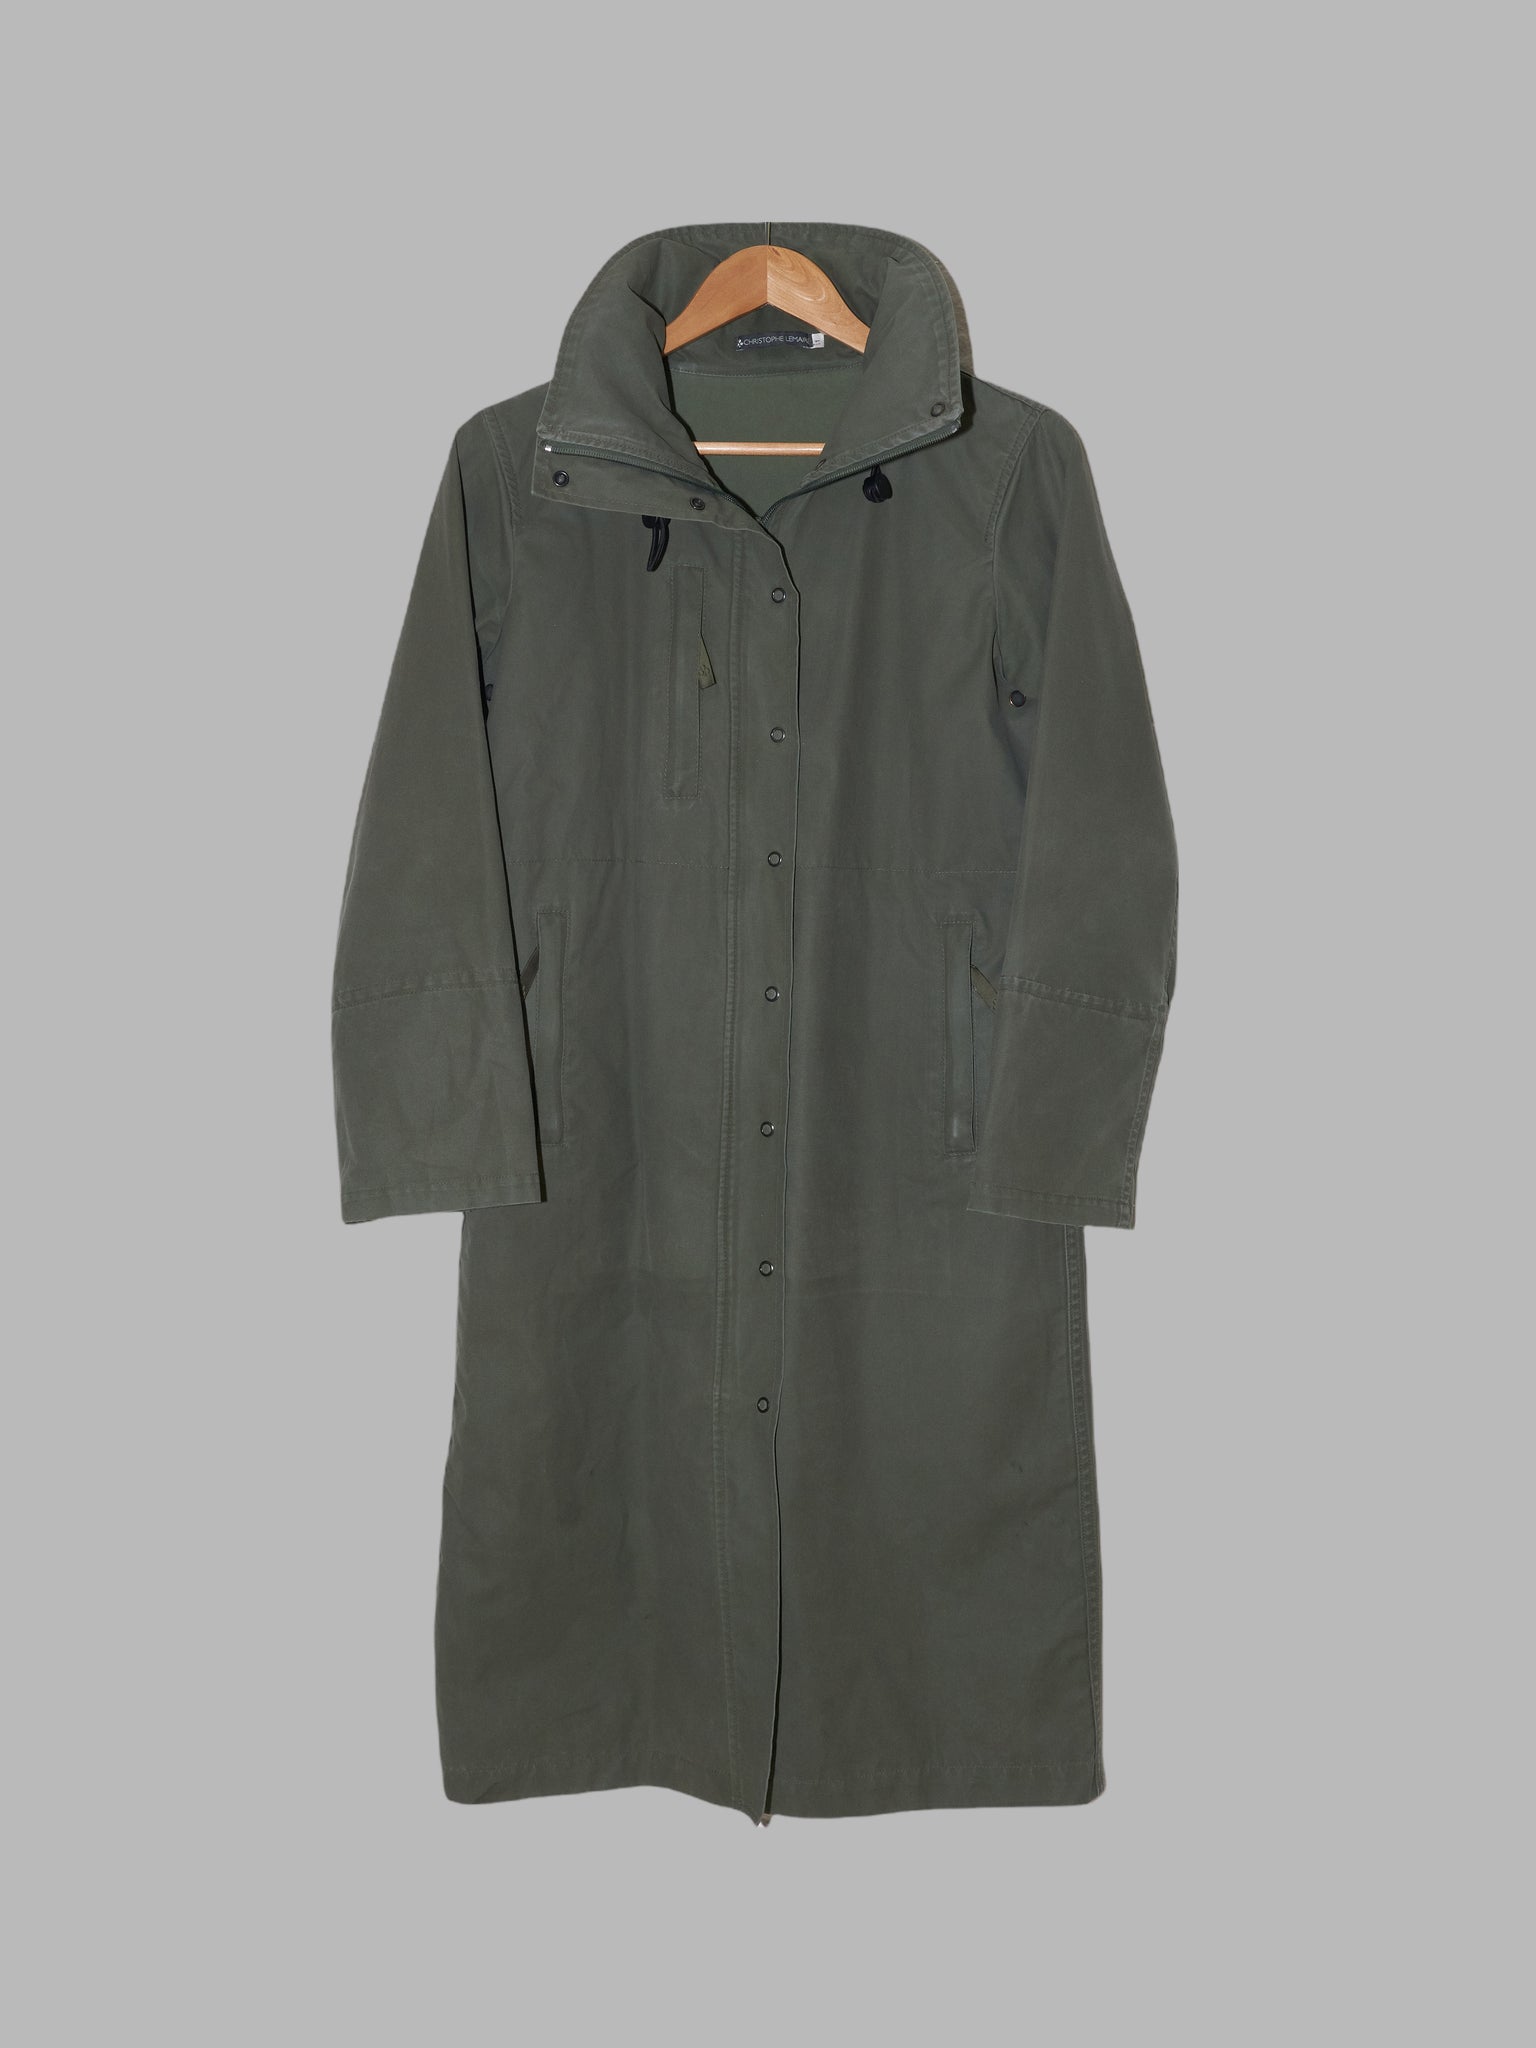 Christophe Lemaire 1990s - 2000s khaki canvas high neck hooded coat - 1 S